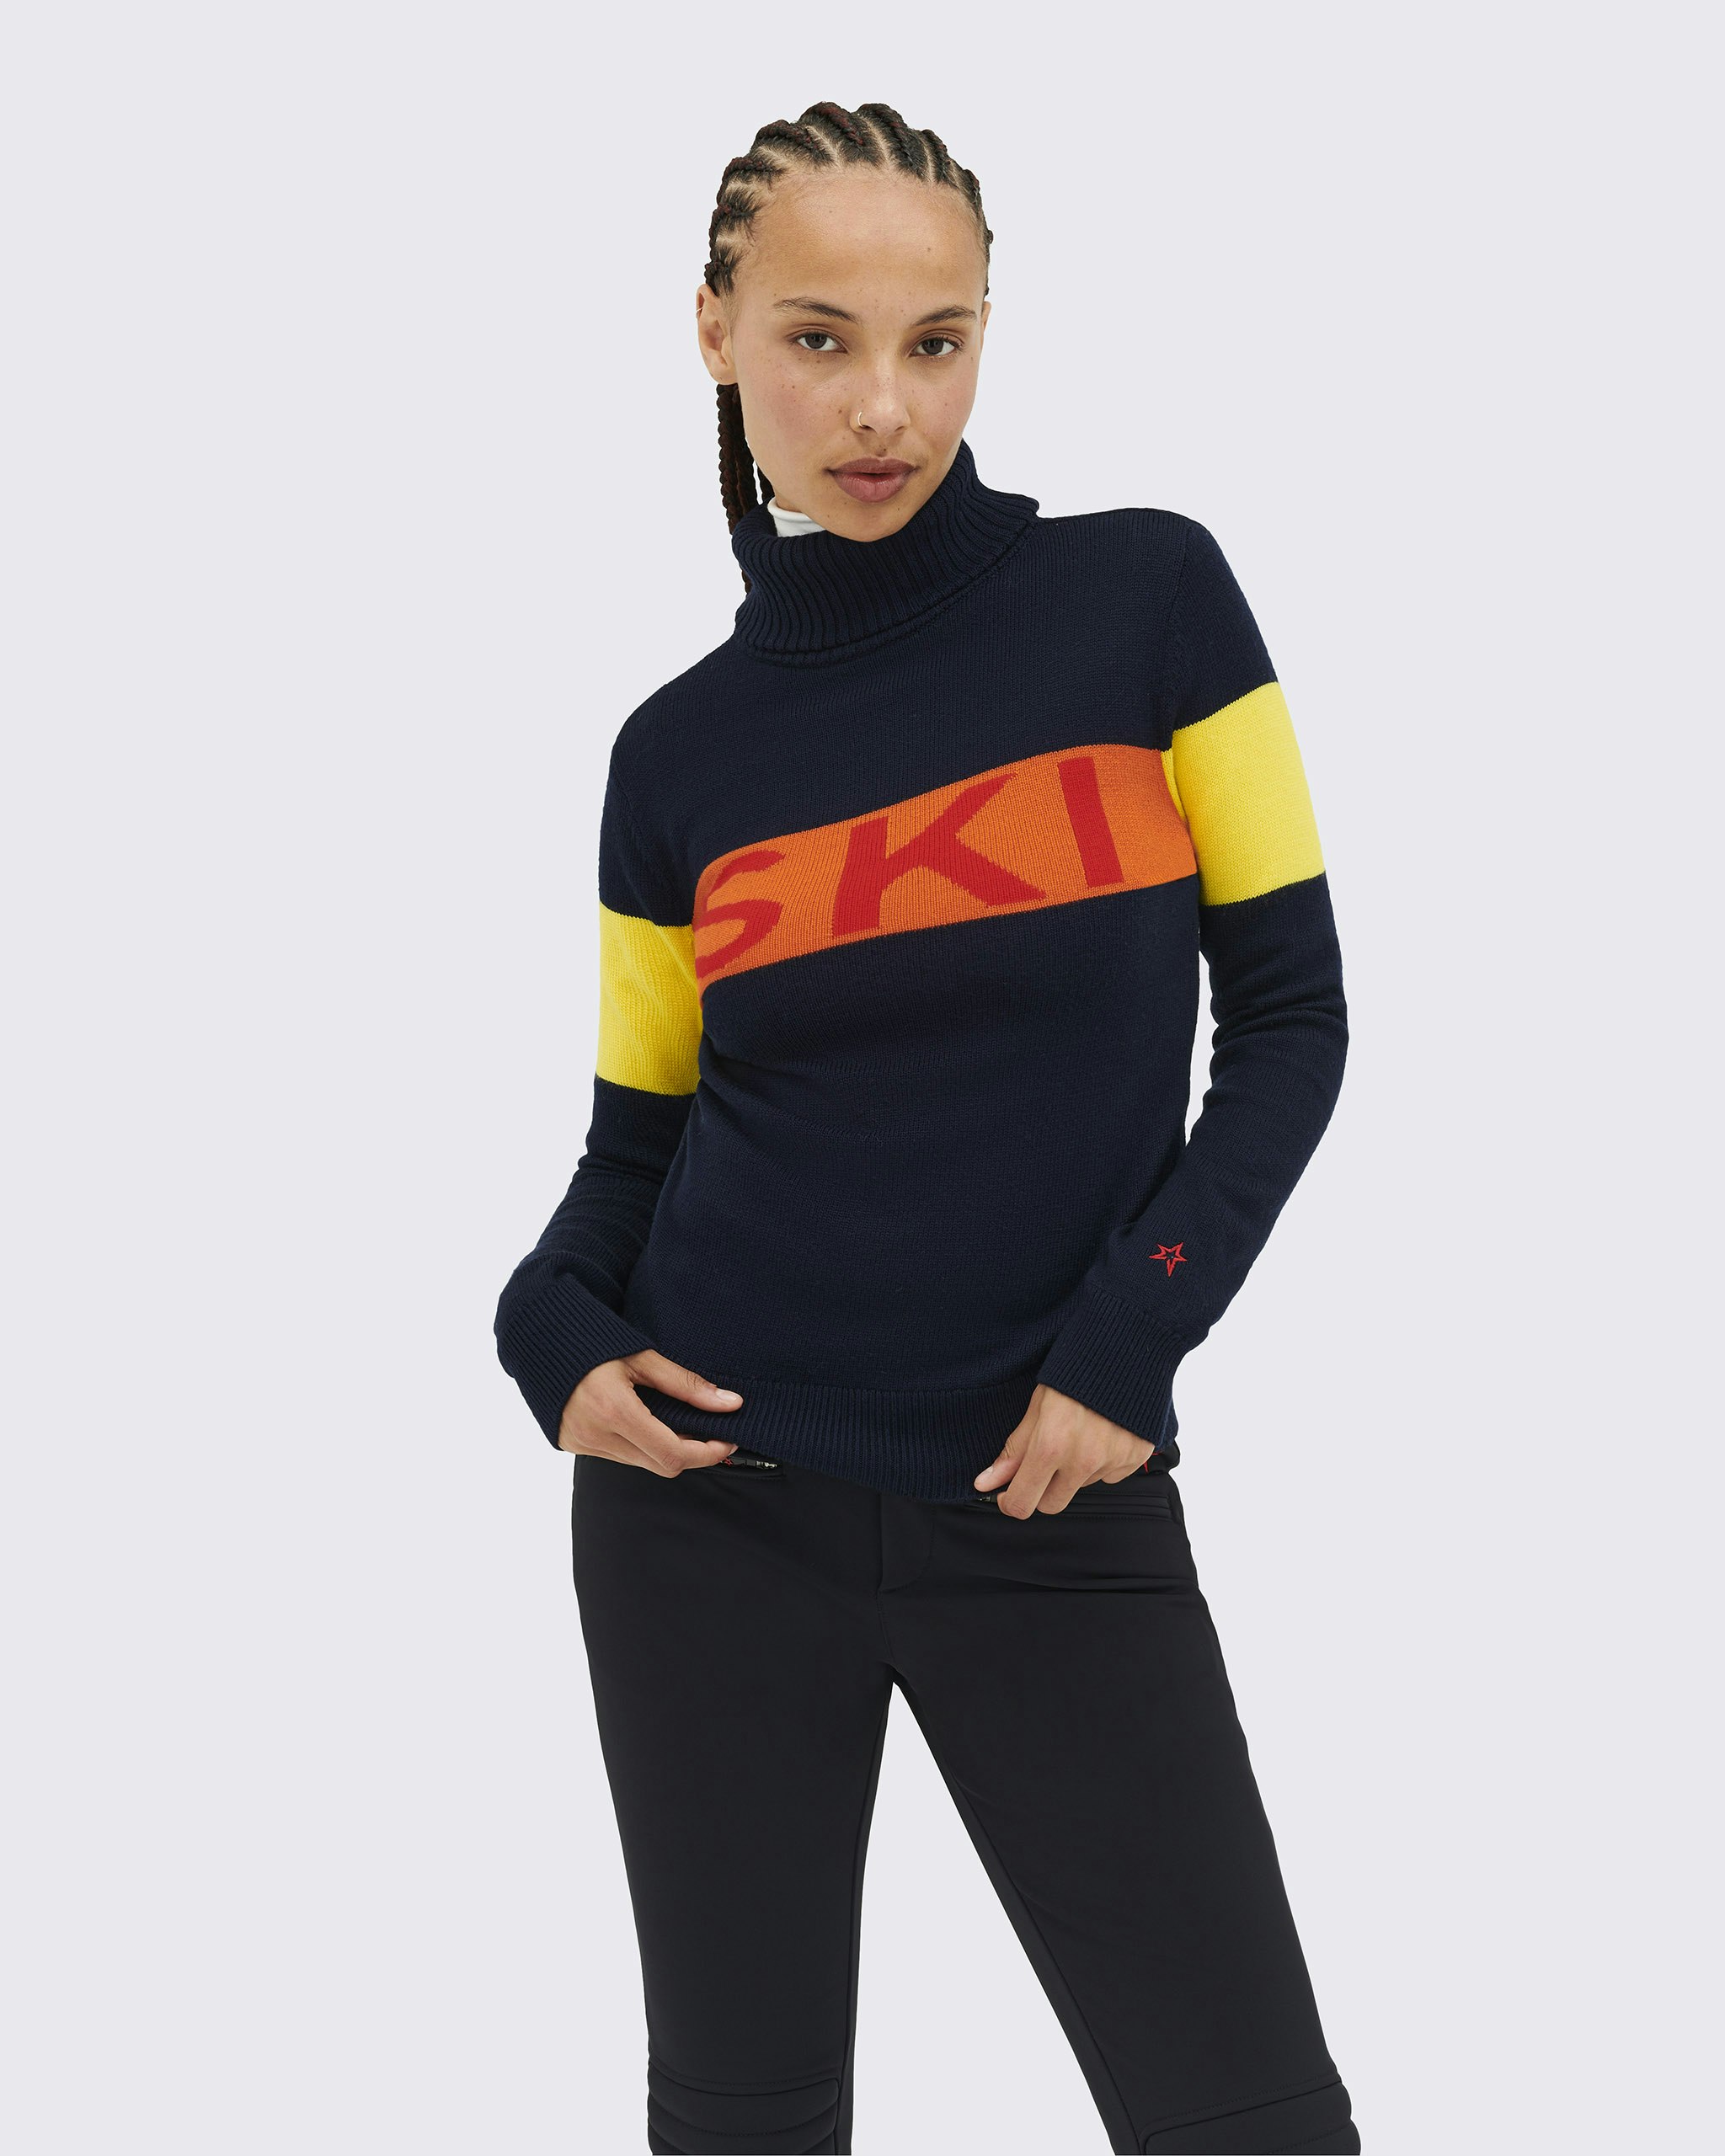 Ralph Lauren Womens Buckle Pullover Sweater India